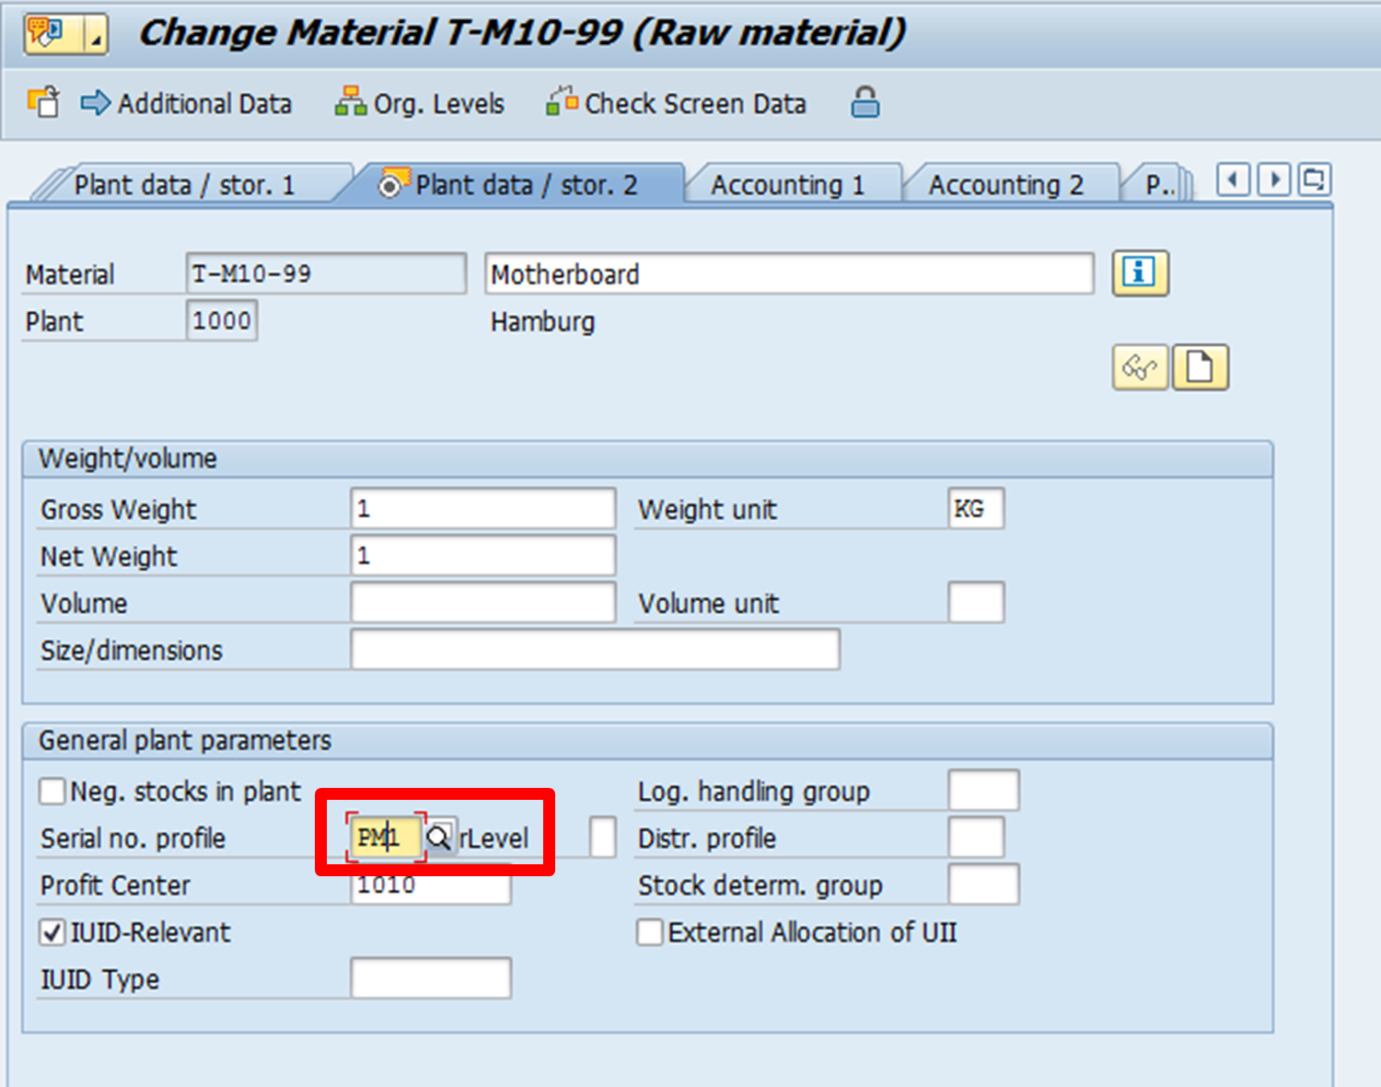 SAP Material Master: Enter Serial Number Profile